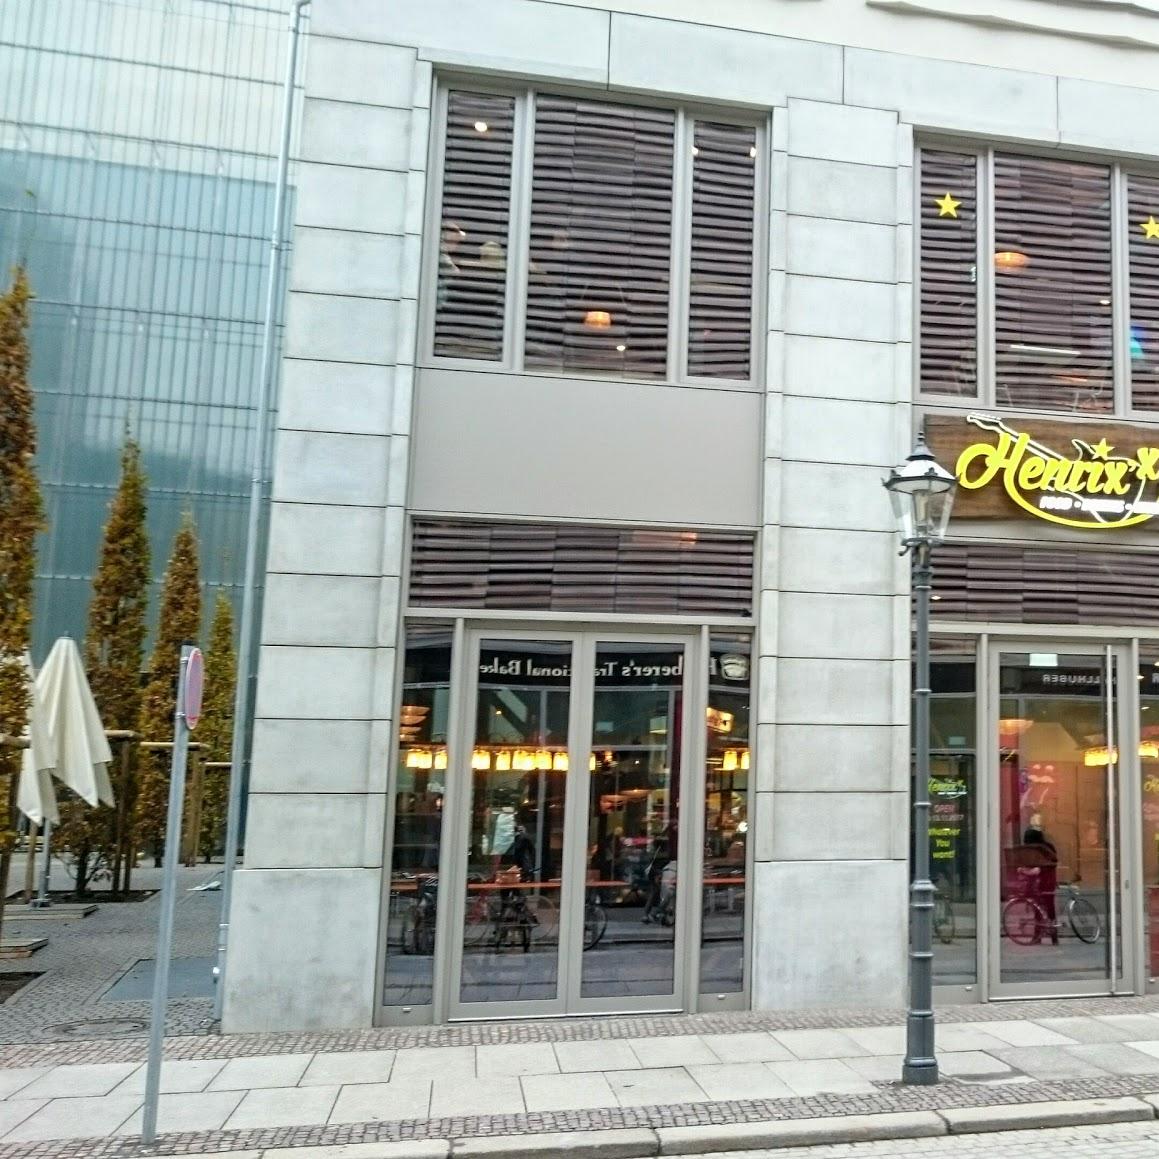 Restaurant "ROCKERIA" in Leipzig